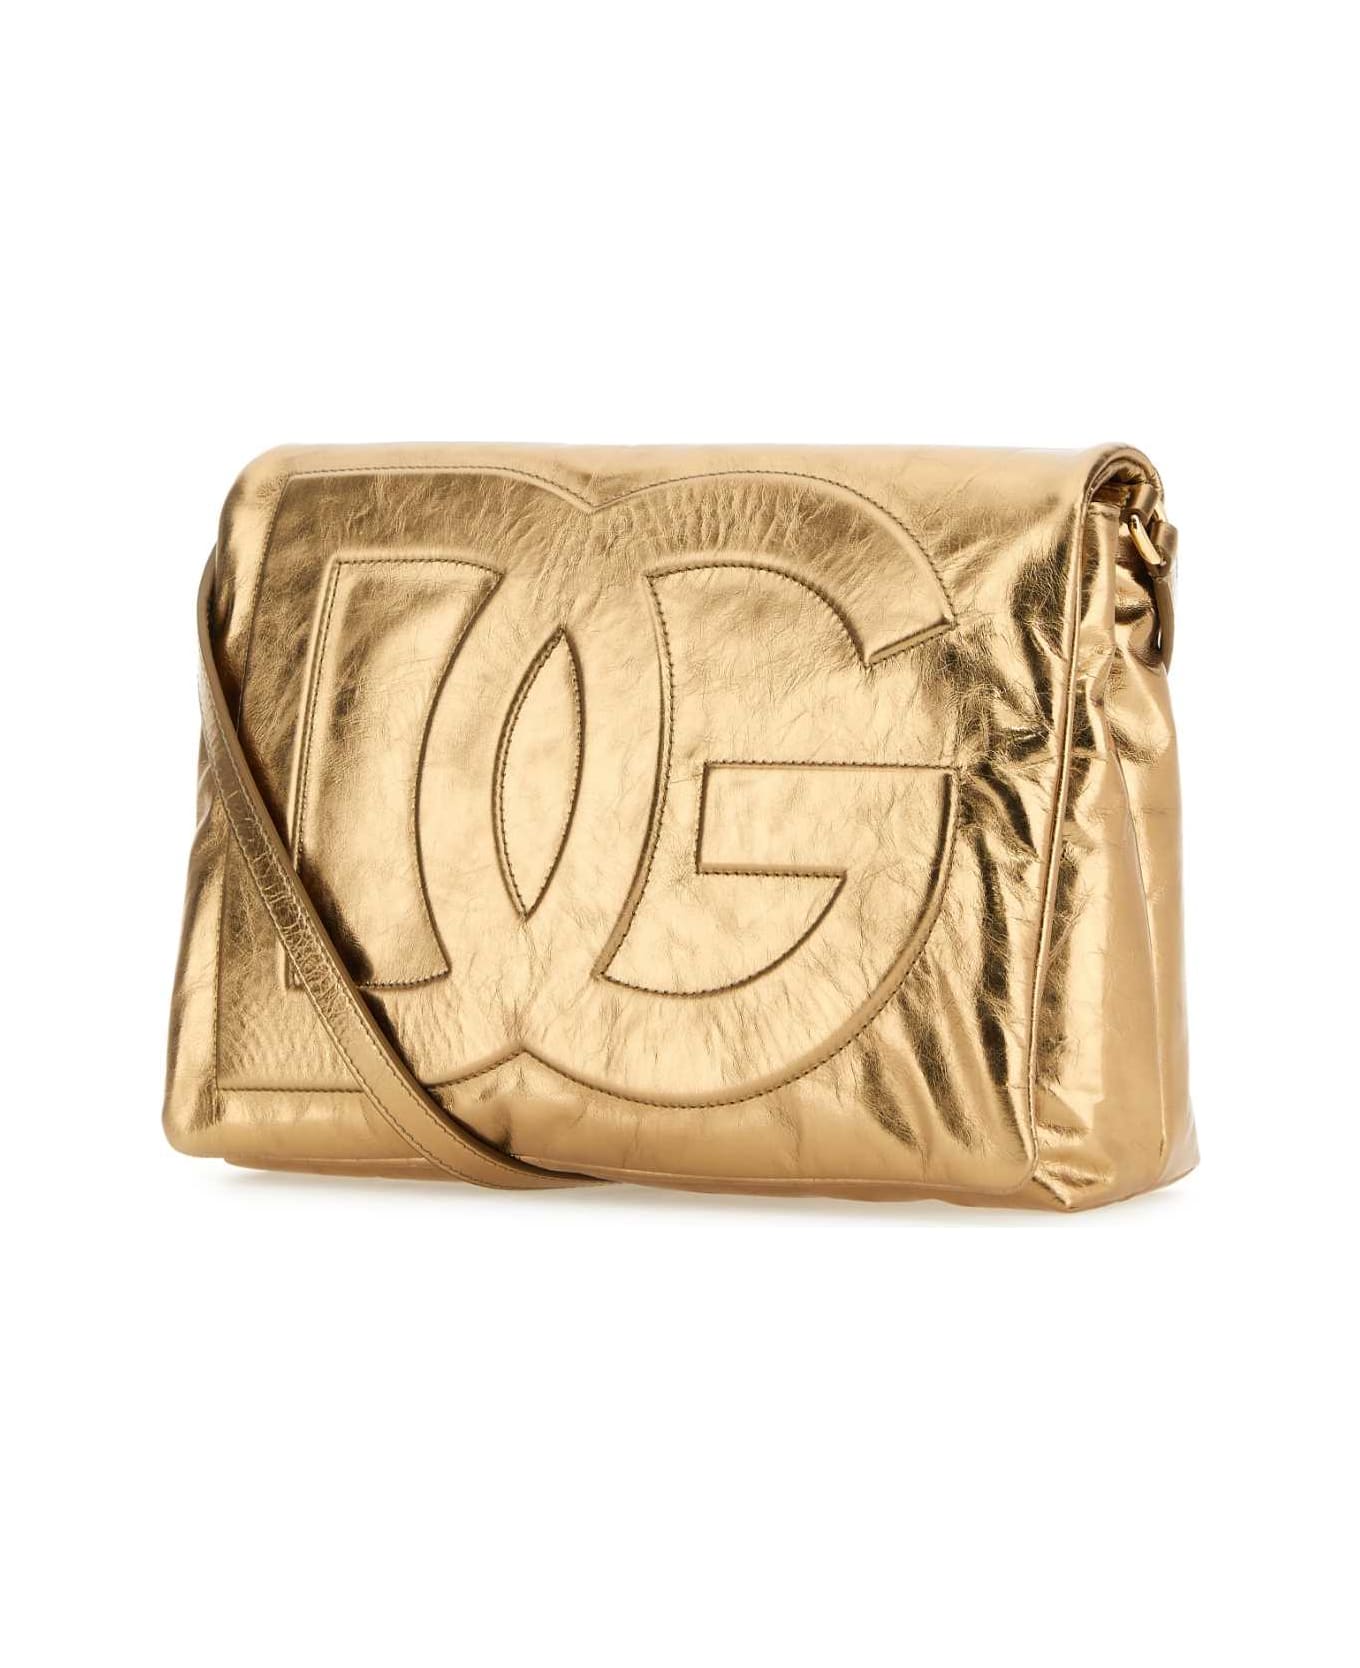 Dolce & Gabbana Gold Leather Dg Logo Bag Soft Clutch - ORO